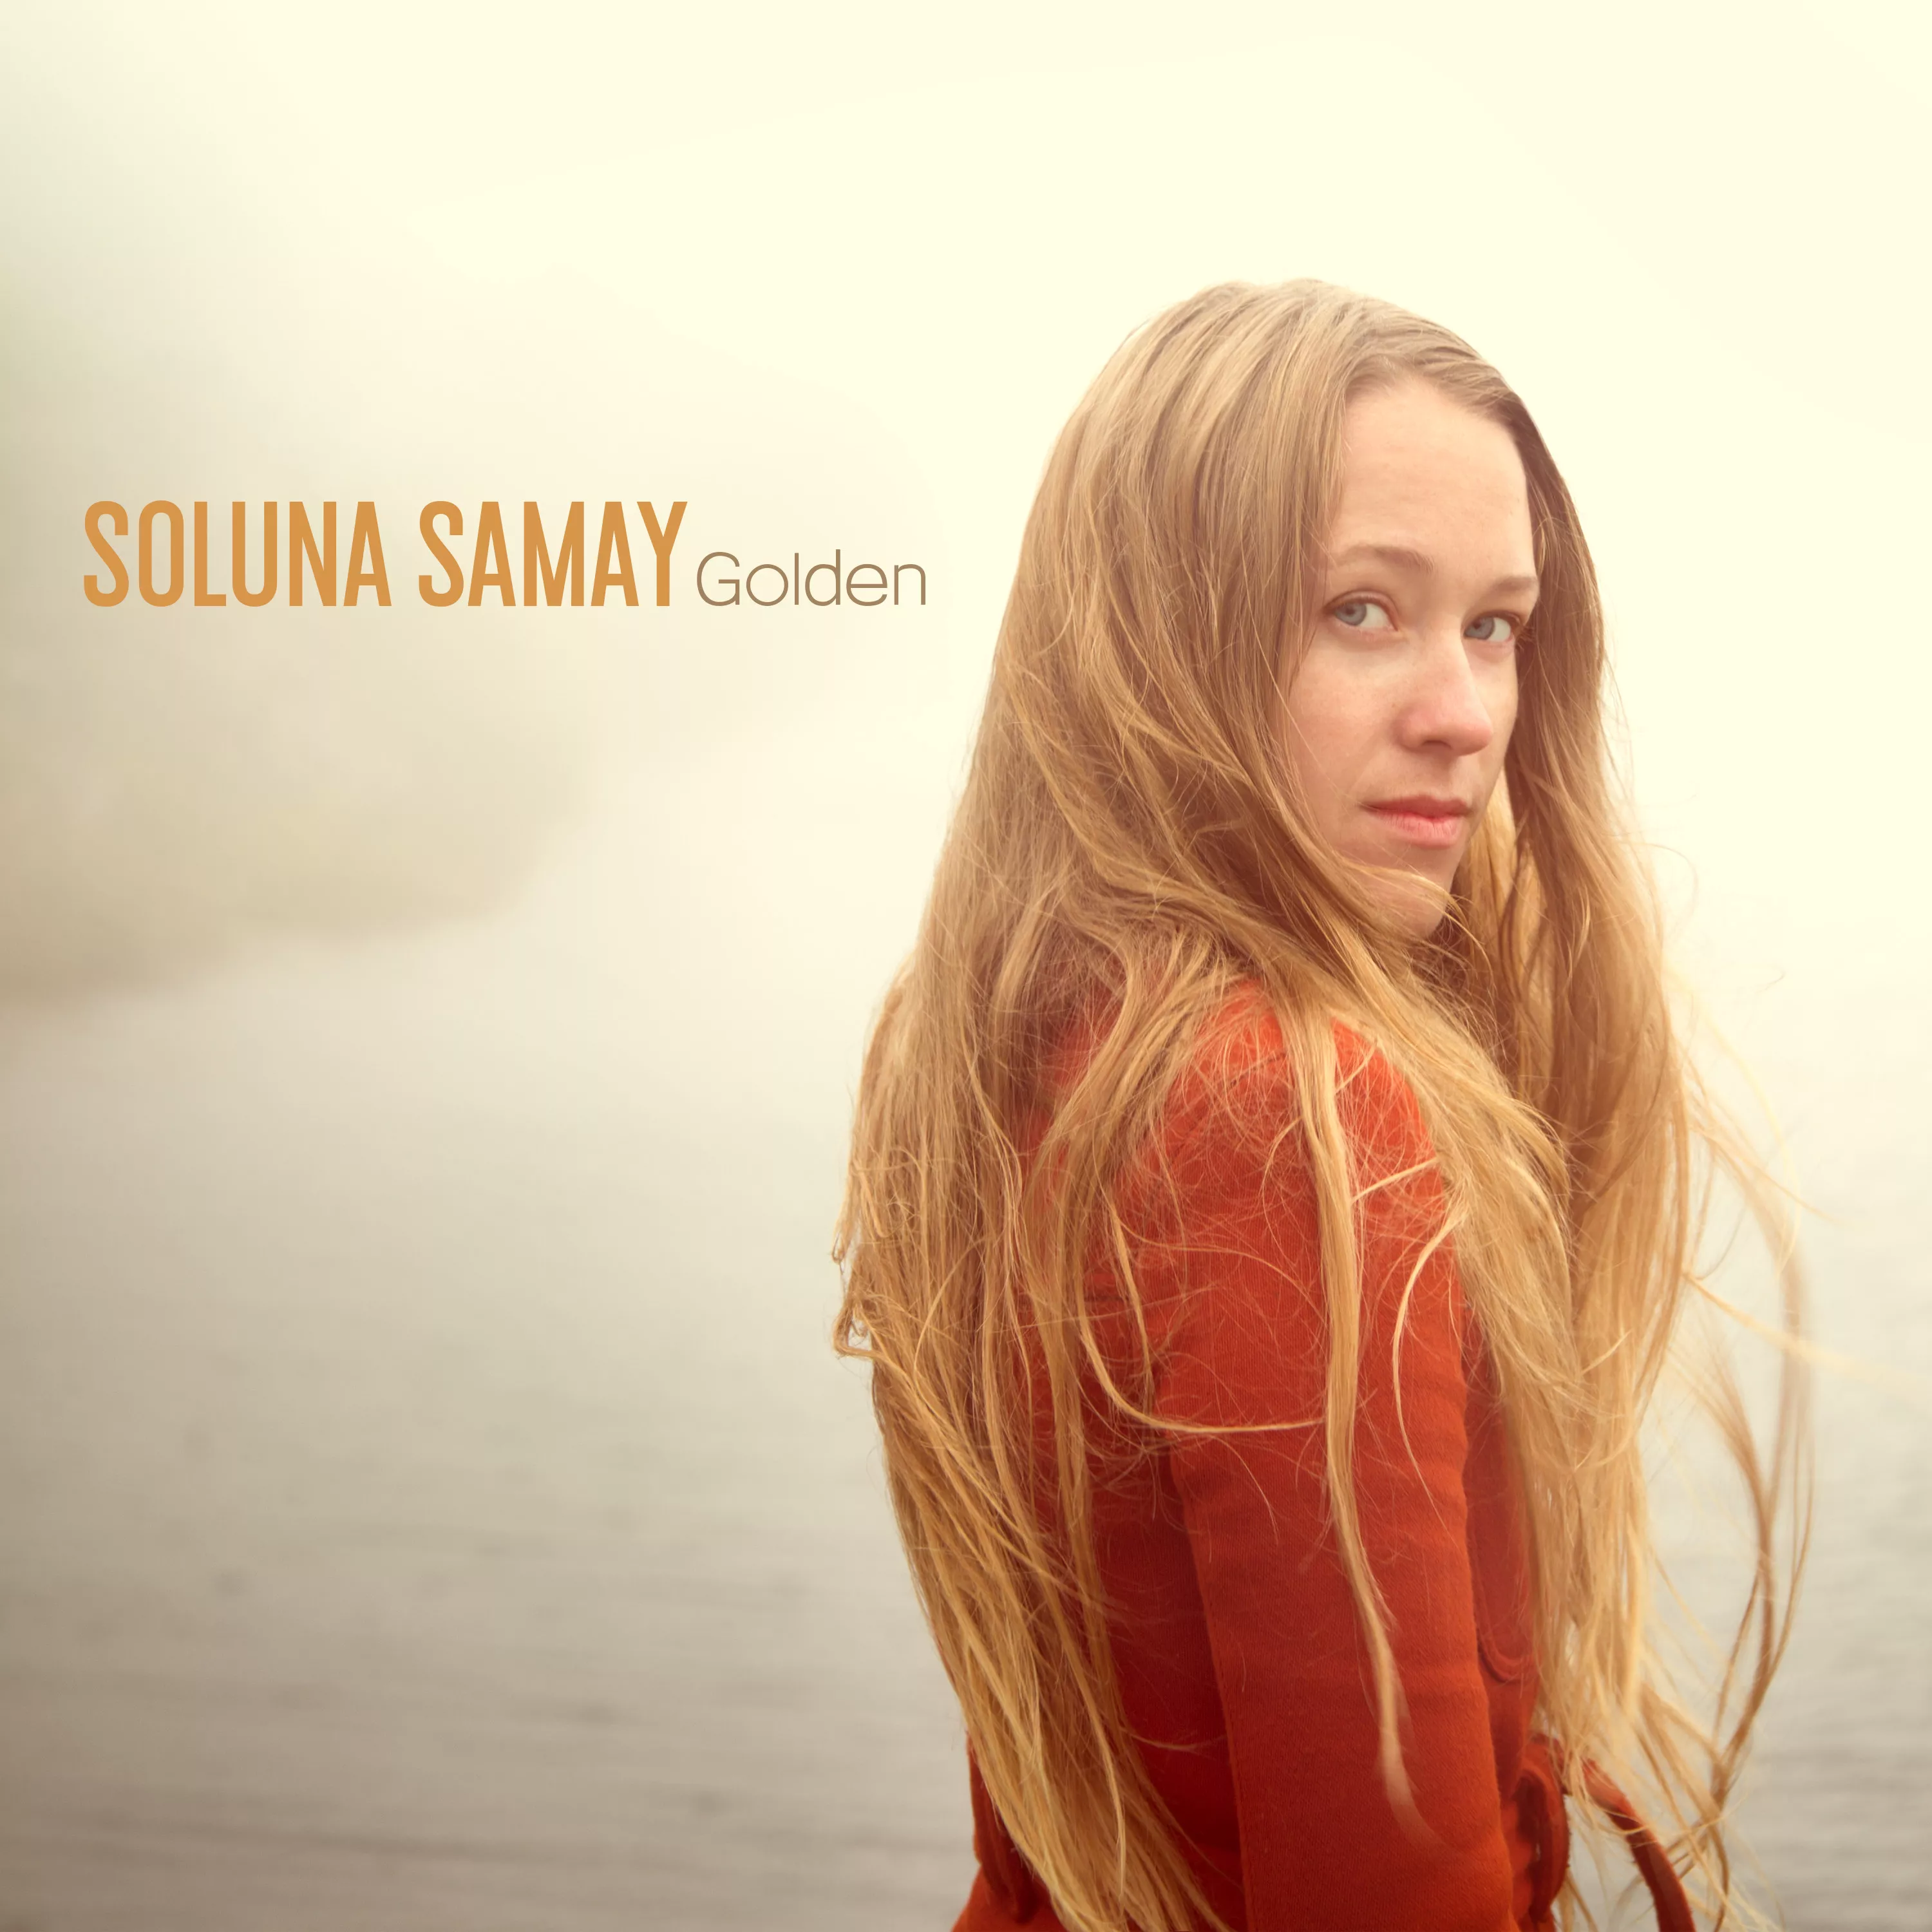 Golden - Soluna Samay